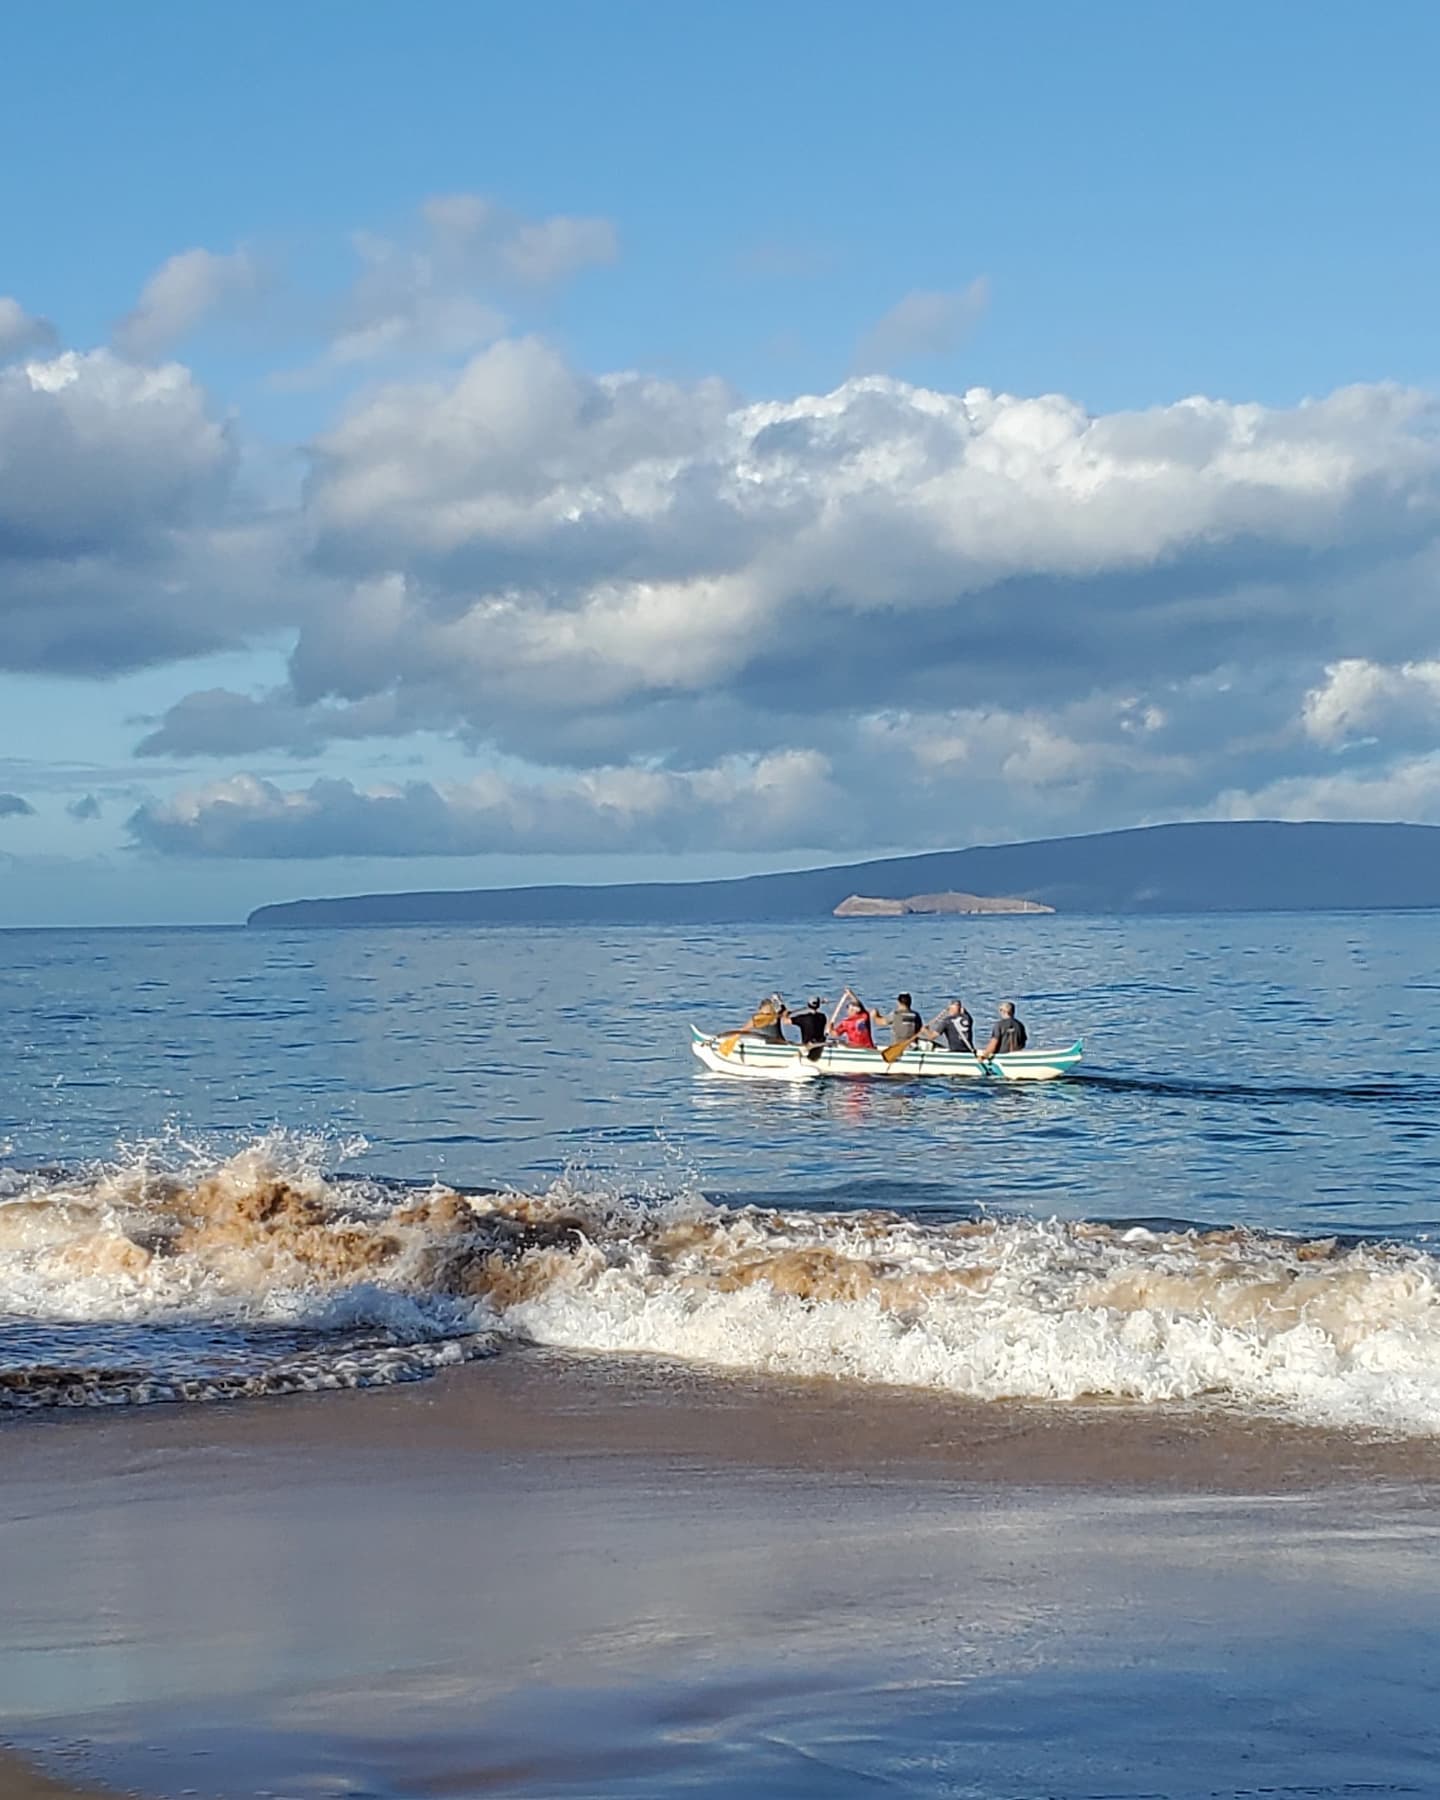 Early morning paddle off of Keawakapu Beach. The Hawaiian word for canoe is wa'a 🛶
🌴
🌺
🌅
⛳
Jill McGowan ~ Maui Realtor
808.658.0575
Jill@LuxuryHomesMaui.com
🌈
🌊
😎
#Wailea #Kihei #Hawaii #Makena #Maalaea #Maluaka #Maui #mauimeadows #Lahaina #Kapalua #oceanfrontproperty #mauilifestyle #luxuryhomes #luxurycondos #movingtomaui #beachfrontproperty #oceanfrontproperty #mauirealestate #mauirealtor #luxuryhomesMaui #mauicondos #mauihomes #resortlife #luxuryresortsmaui #paddlers #mauilifestyle